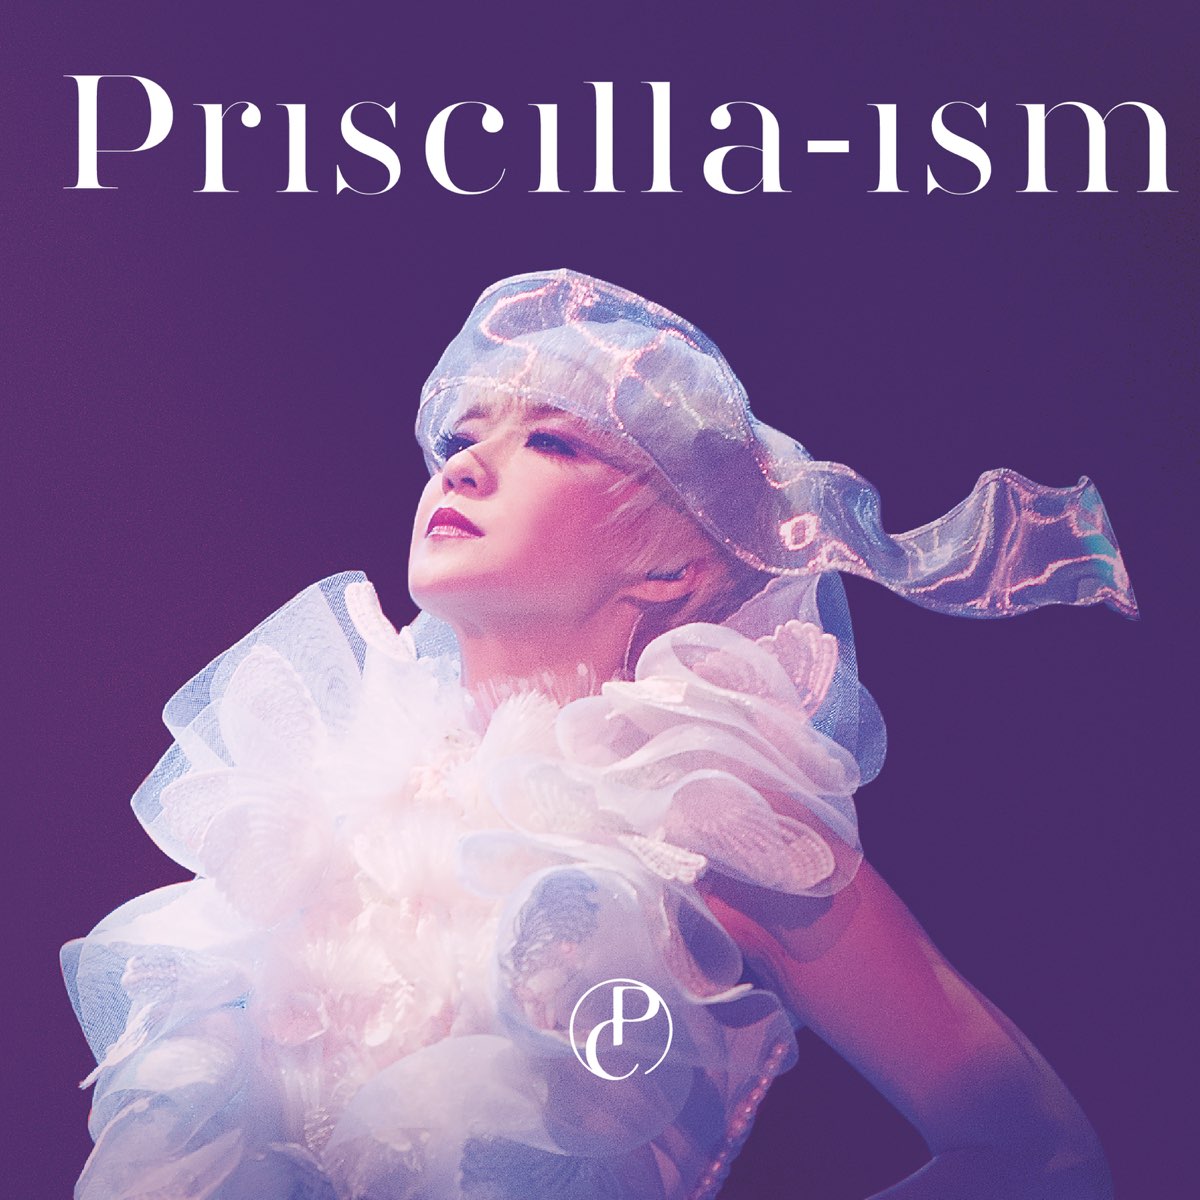 Apple Music 上陈慧娴的专辑《Priscilla-ism 2016 Live》